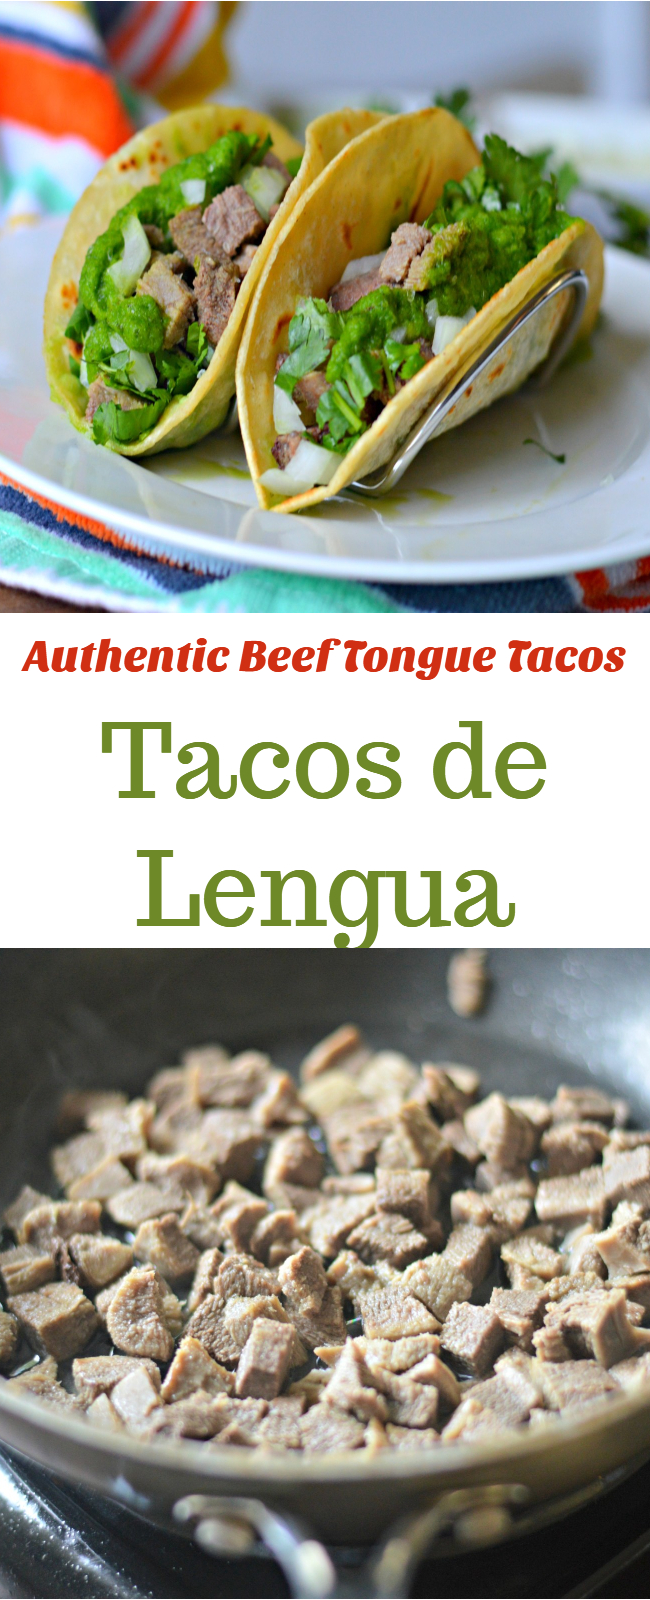 How To Make Authentic Beef Tongue Tacos (Tacos de Lengua Recipe)